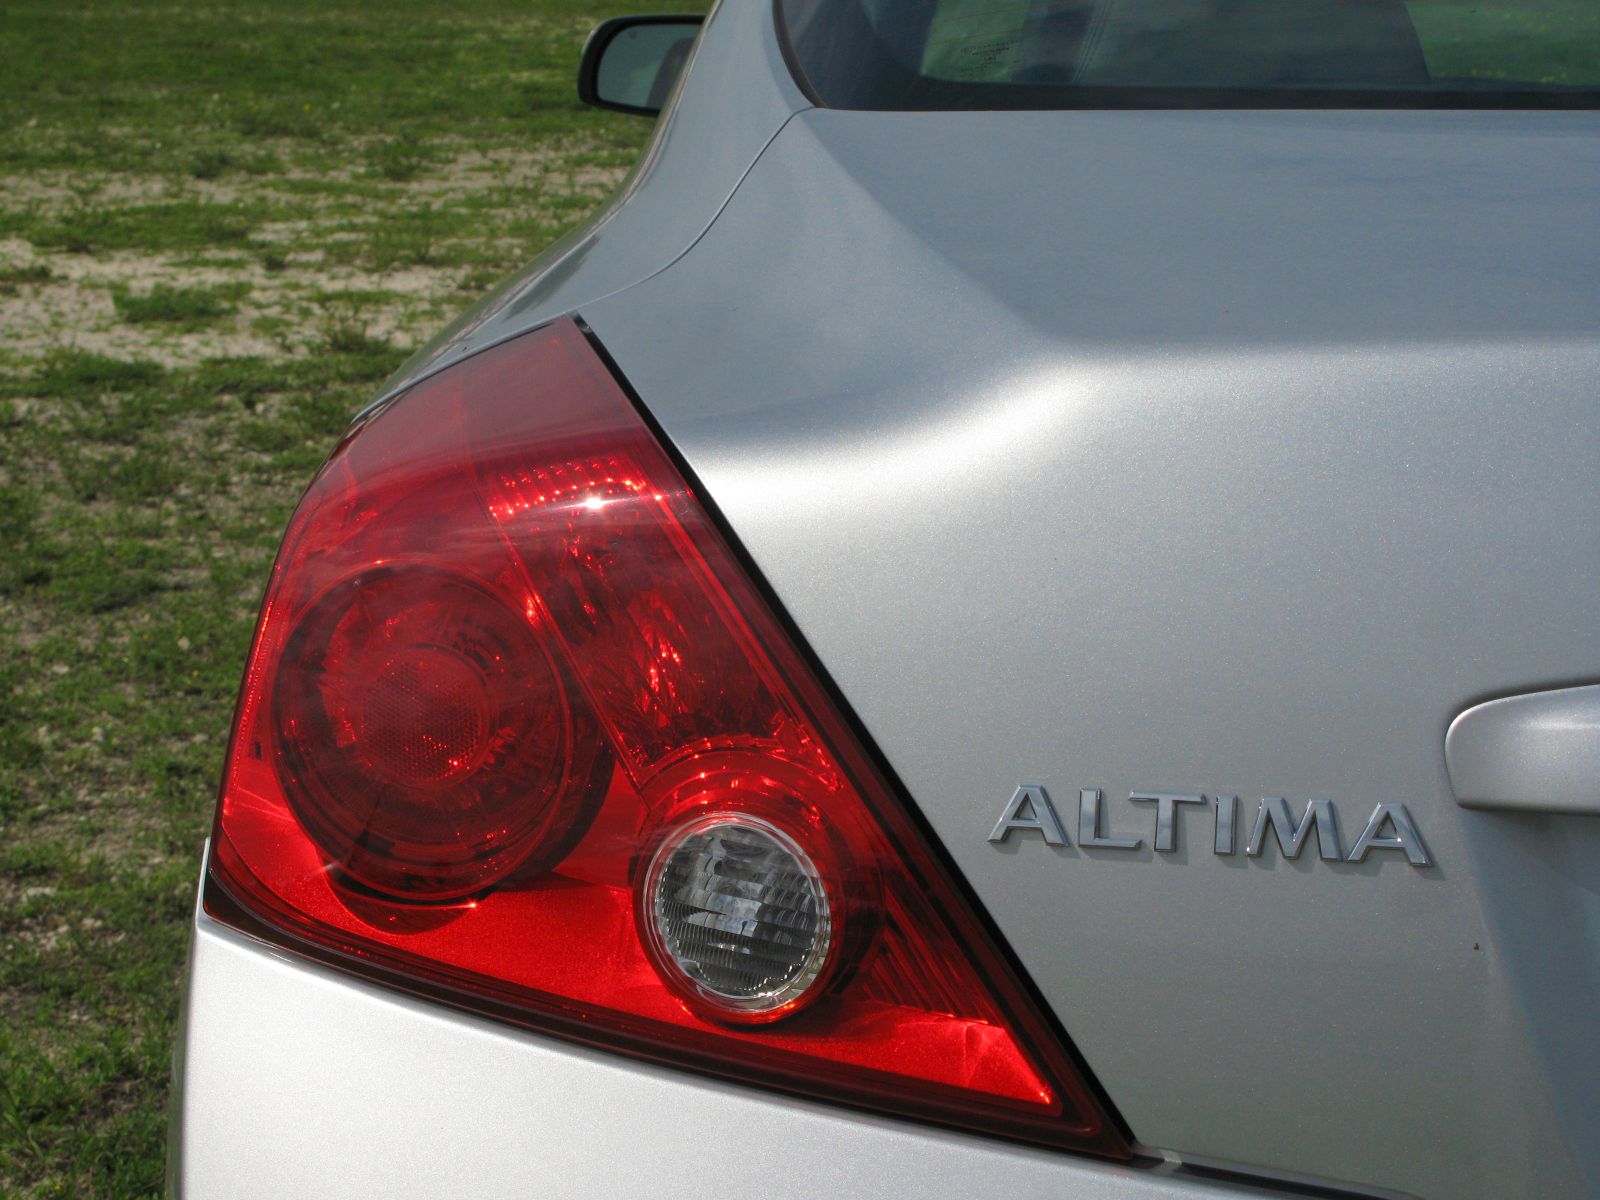 2009 Nissan Altima Coupe 3.5 SE